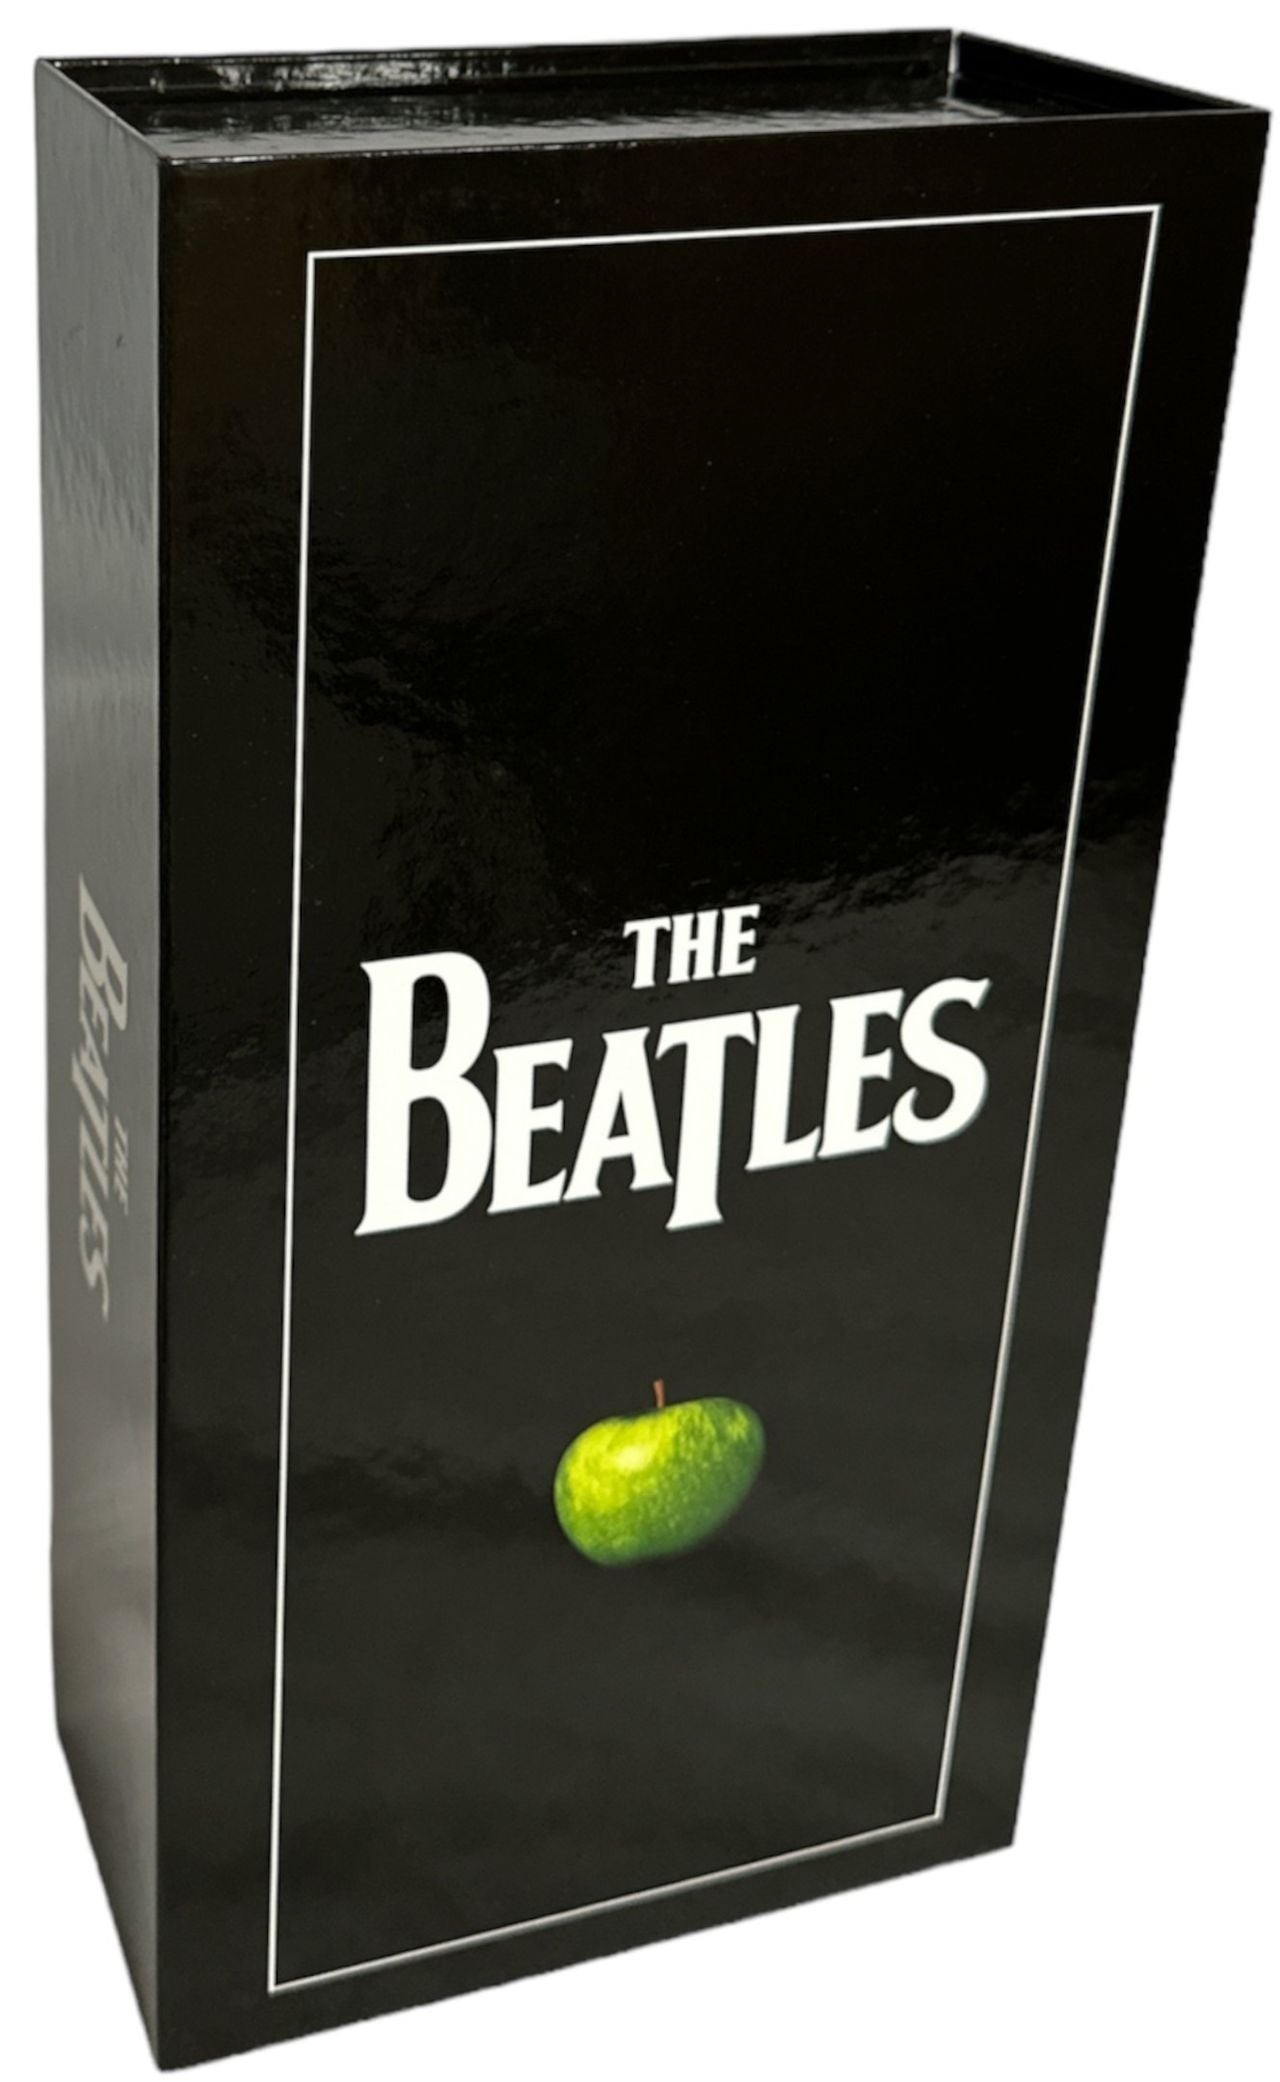 The Beatles The Beatles (In Stereo) UK Cd album box set